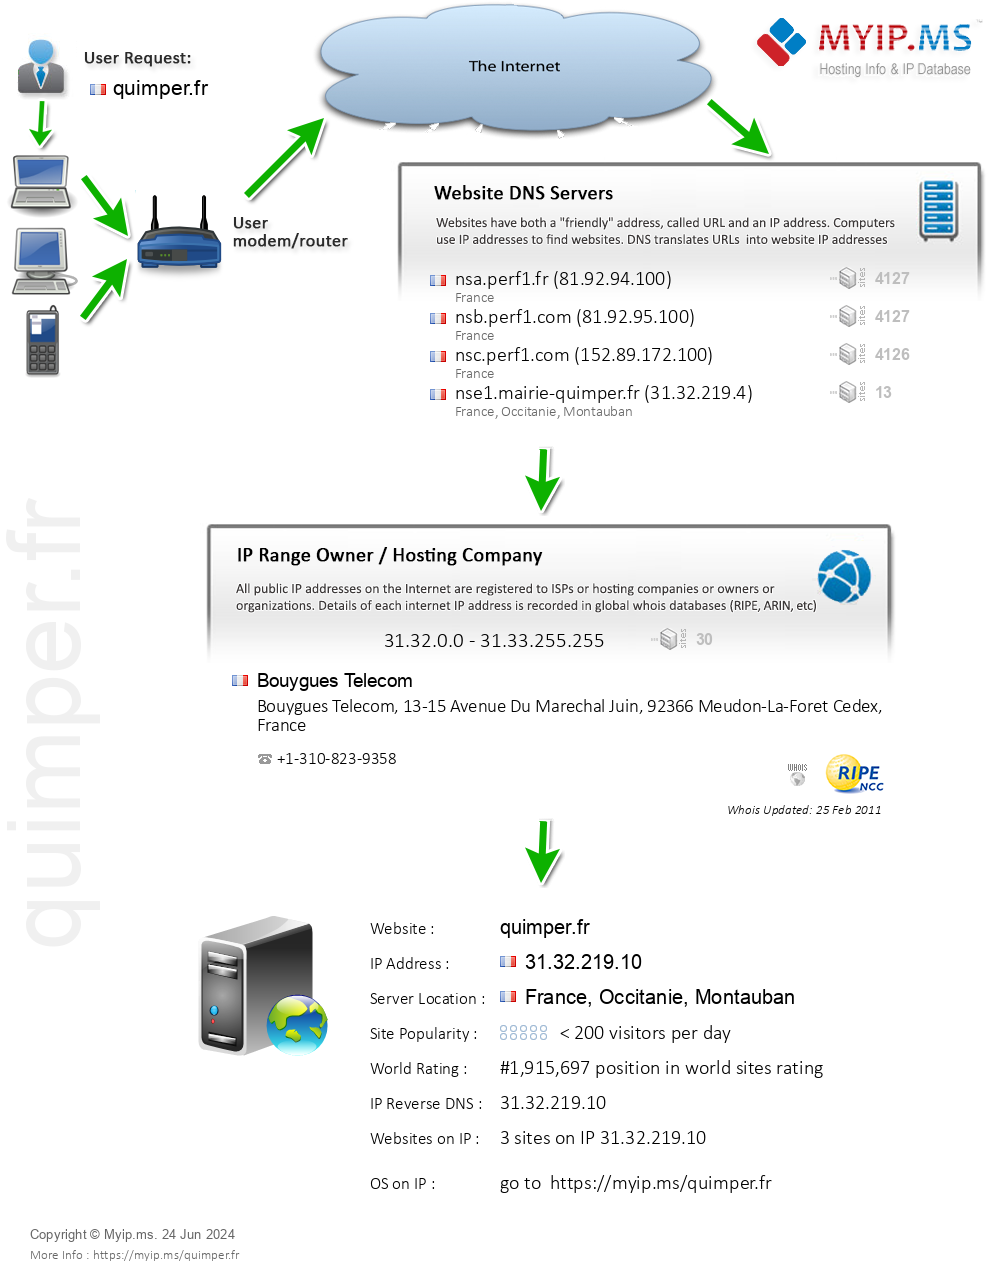 Quimper.fr - Website Hosting Visual IP Diagram